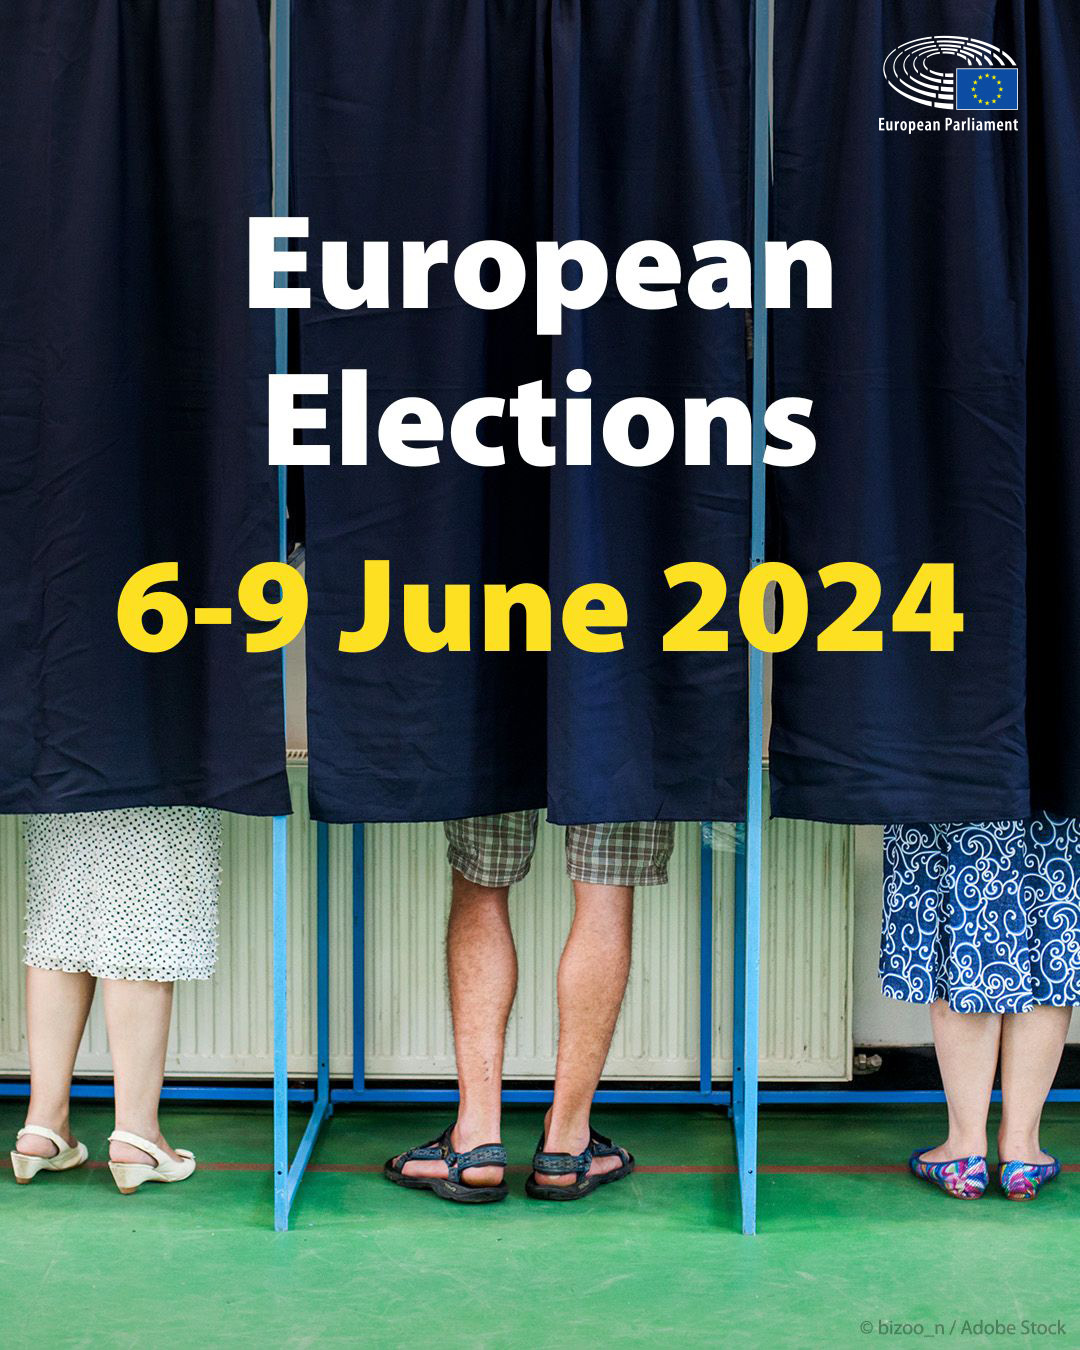 European Elections 6-9 June 2024.jpg